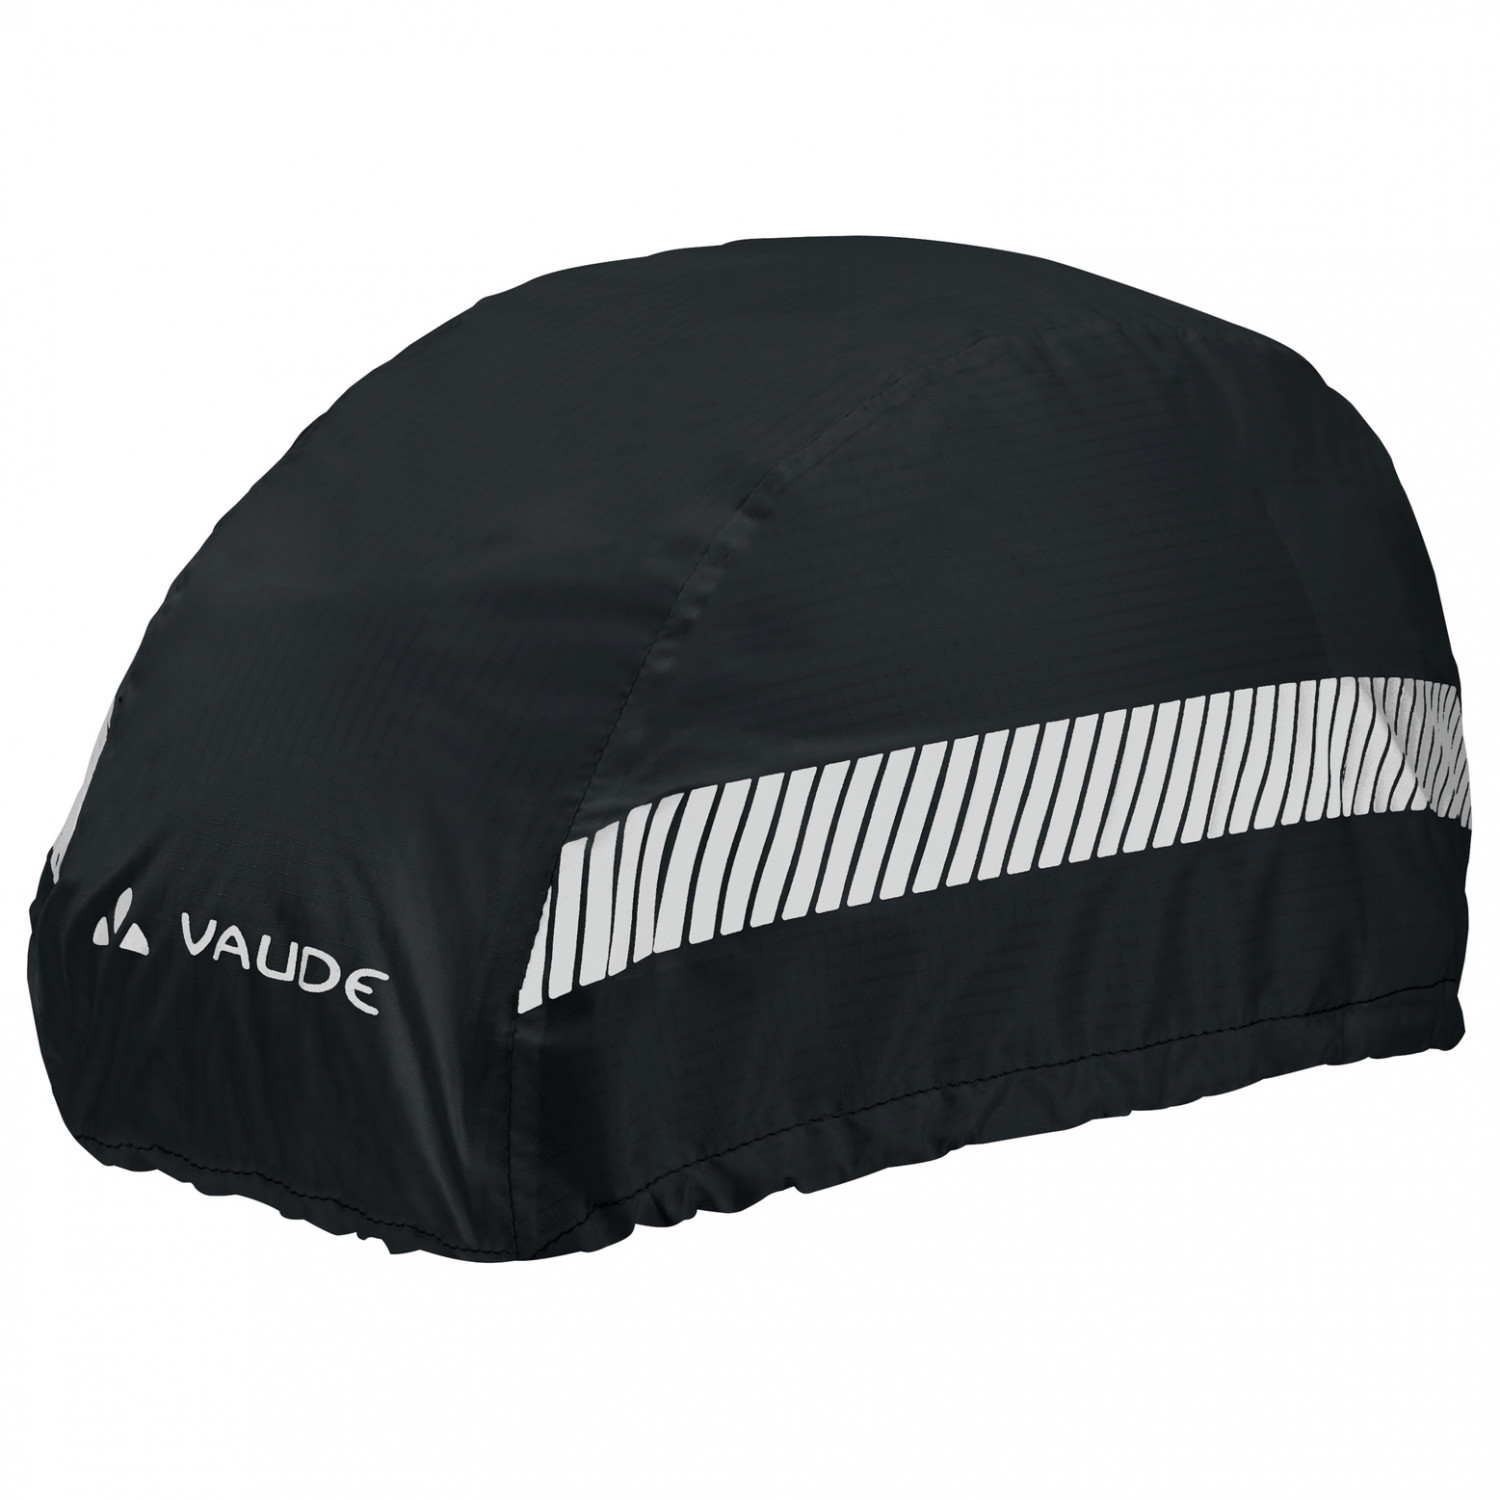 Дождевик Vaude Luminum Helmet Raincover, черный дождевик raincover zigi silver